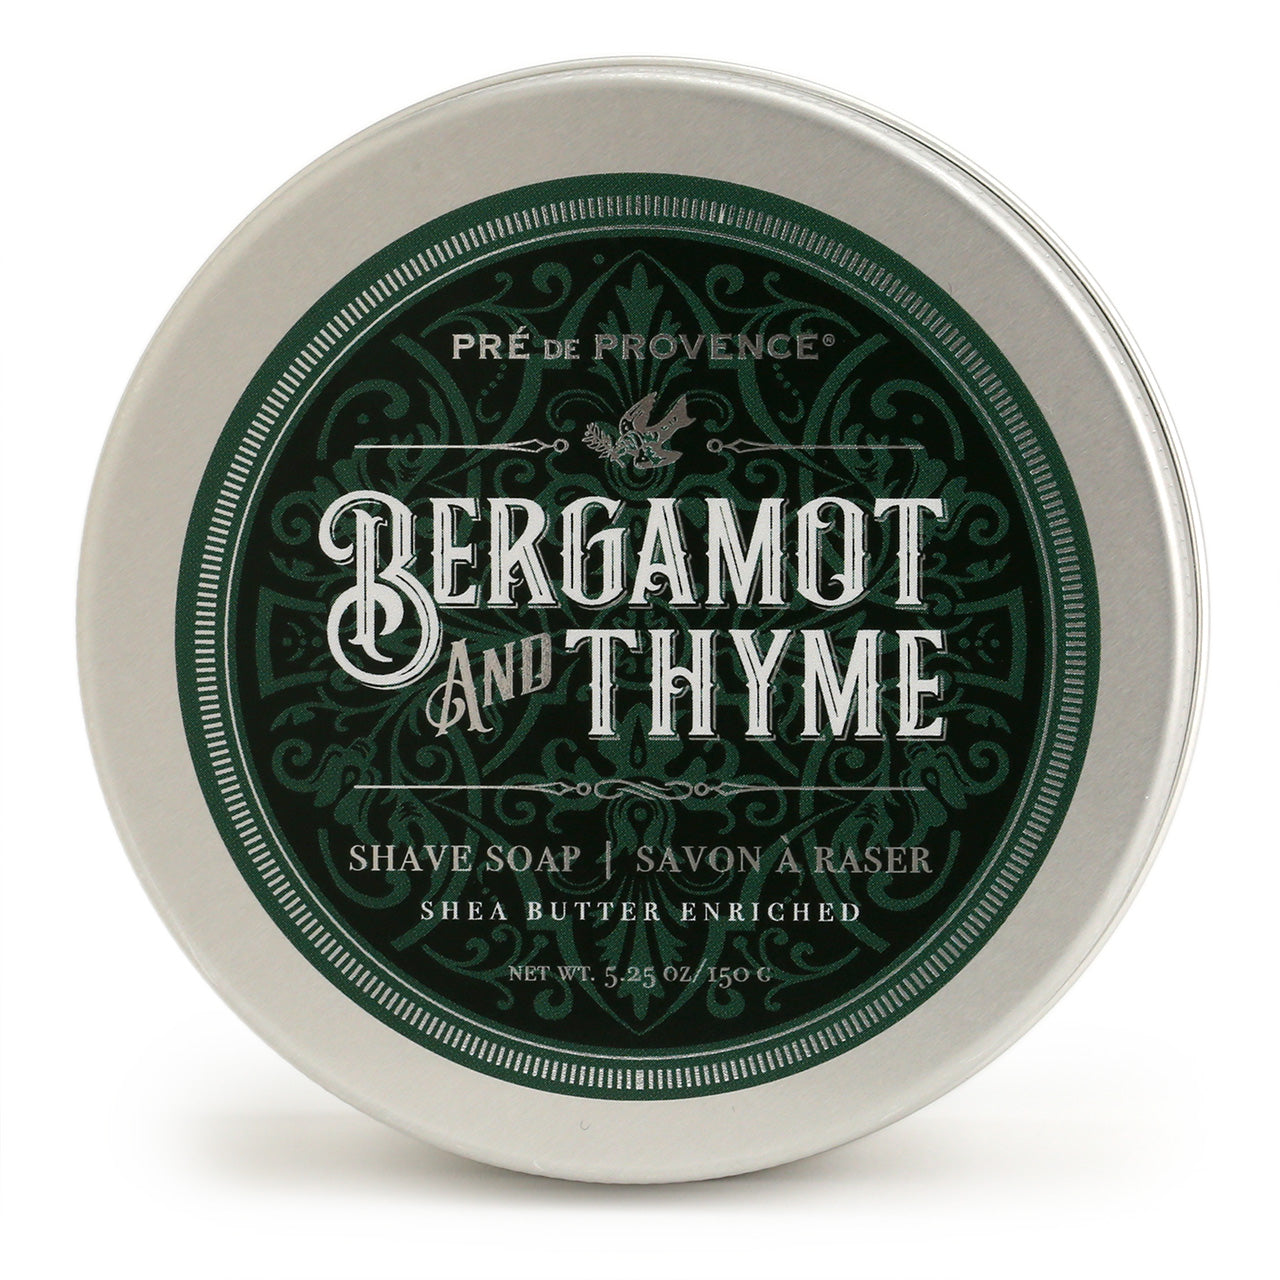 Pres de Provence Bergamot & Thyme shave soap tin, top view